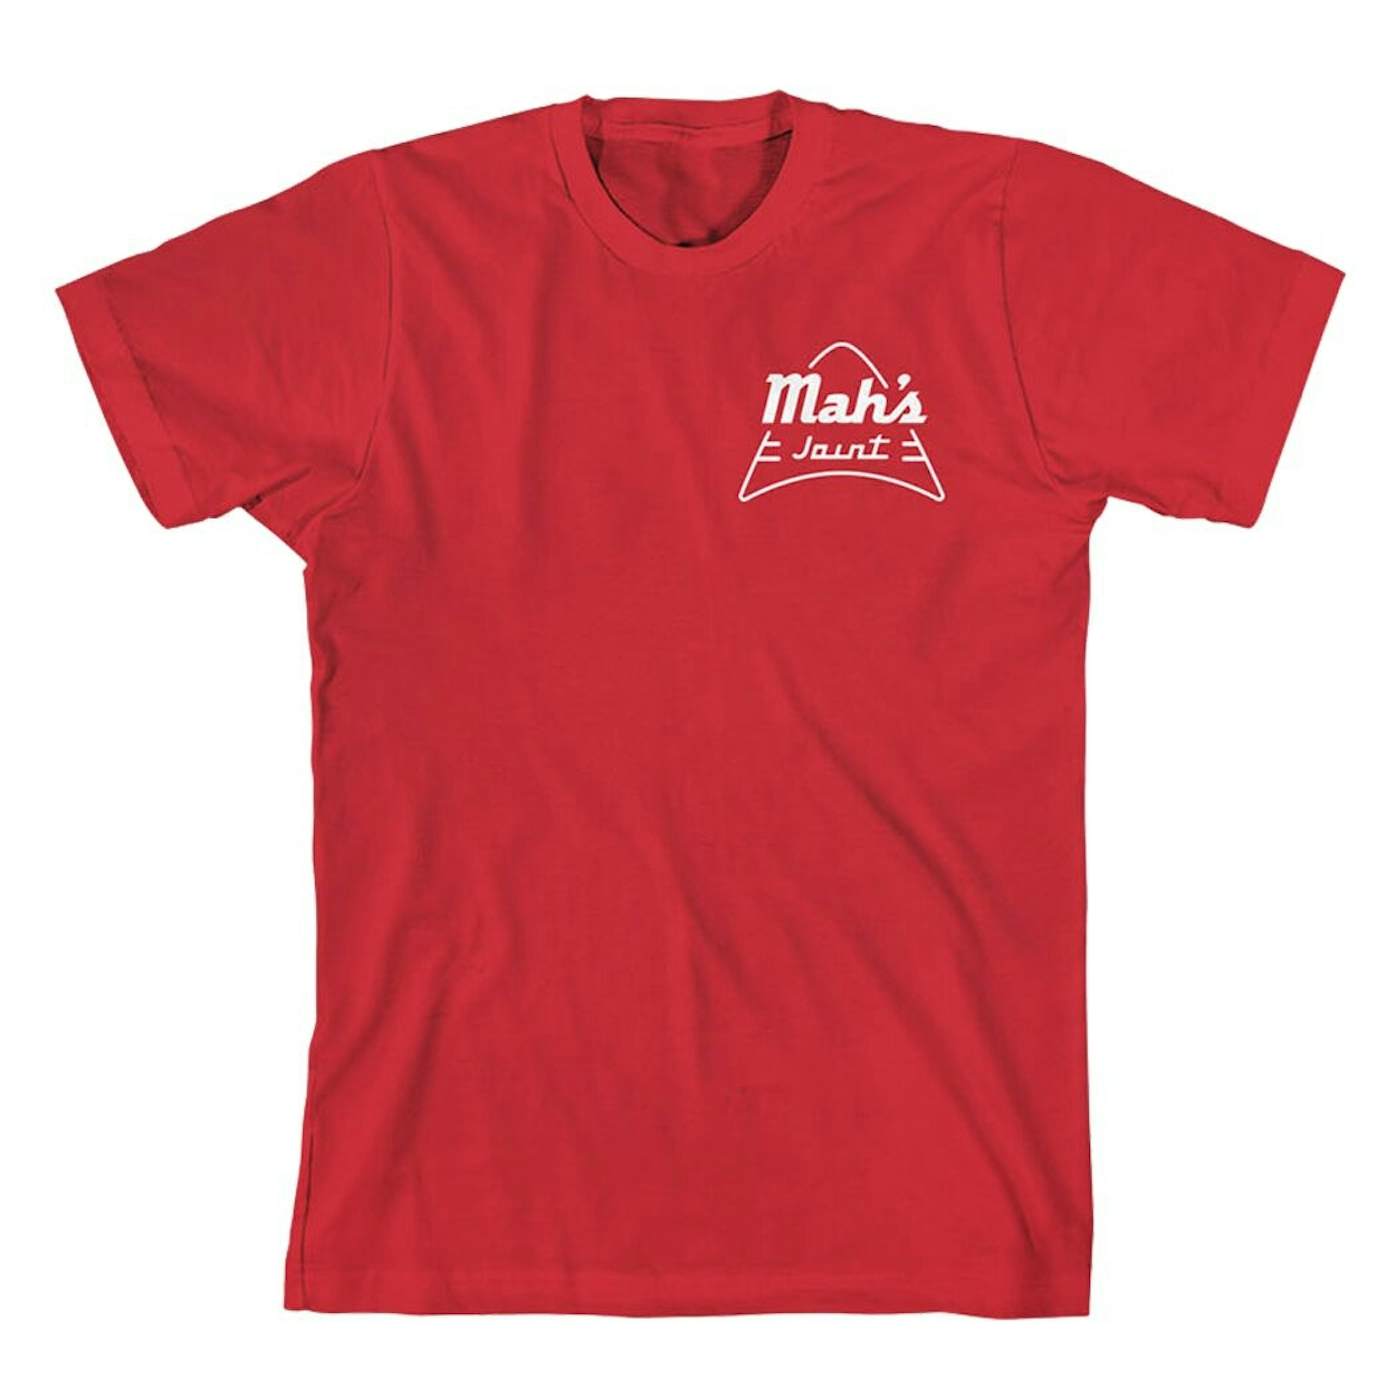 Jon Bellion Mah Knows Best T-Shirt